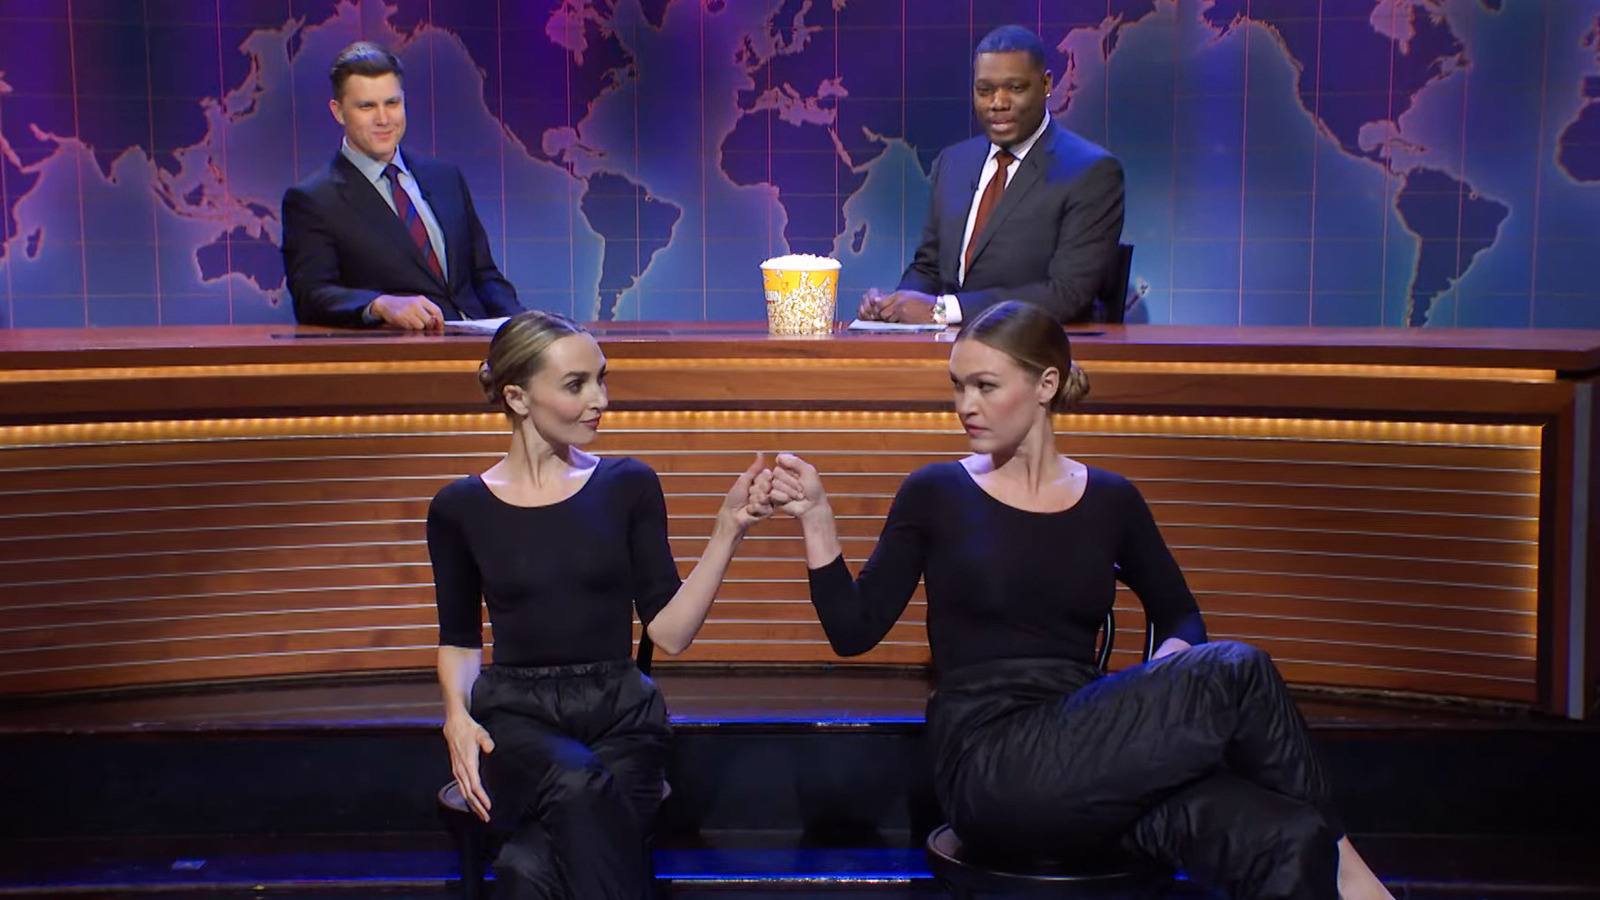 Julia Stiles Saves The Last Dance (Again) On Saturday Night Live